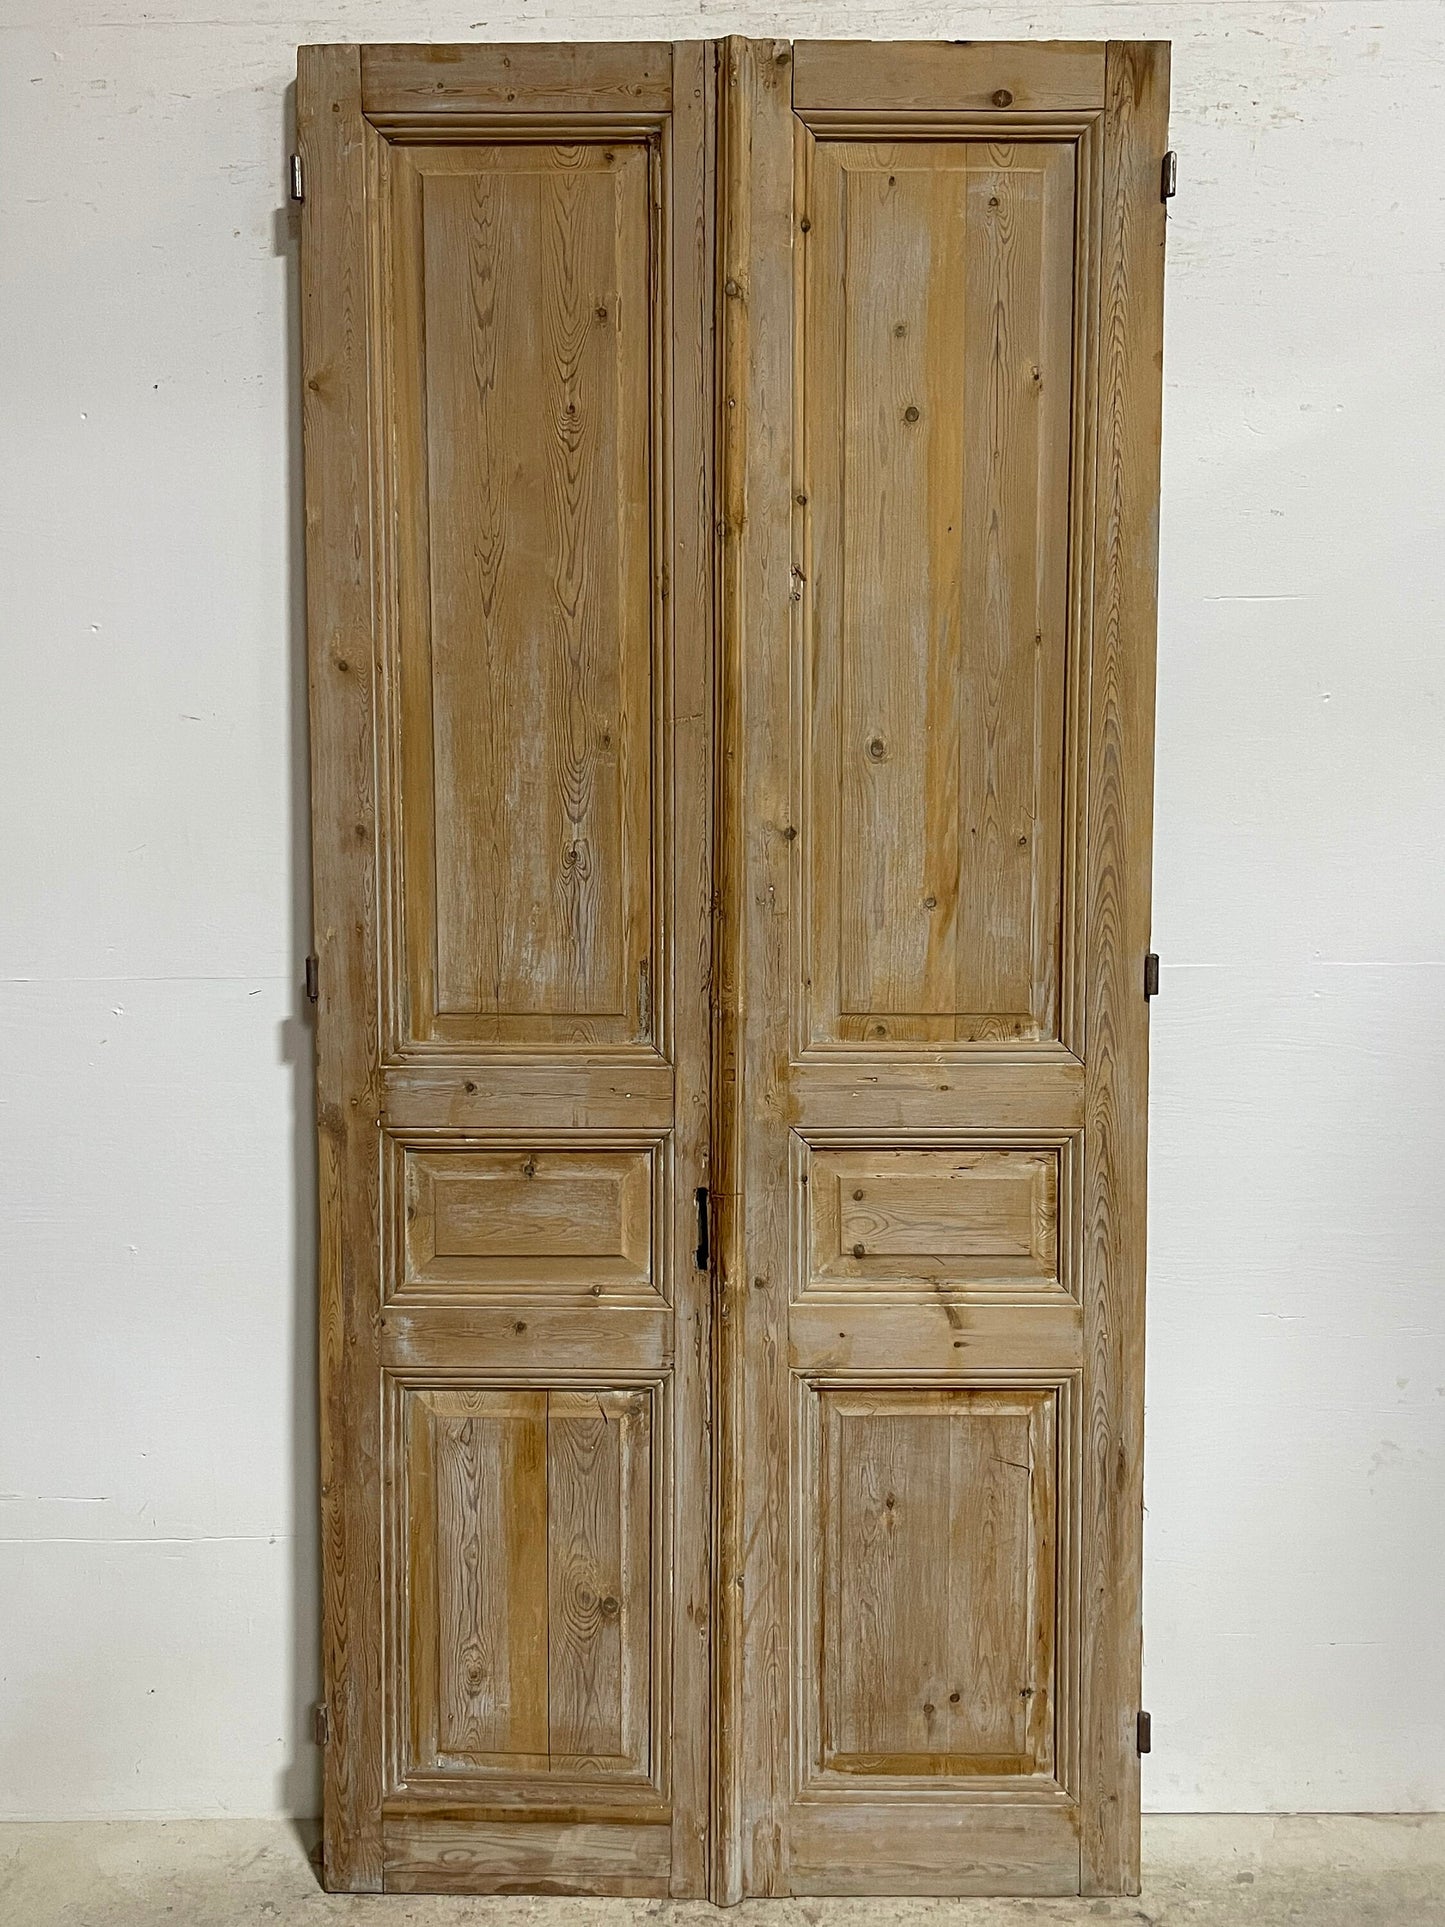 Antique French panel doors (94x42.75) I100